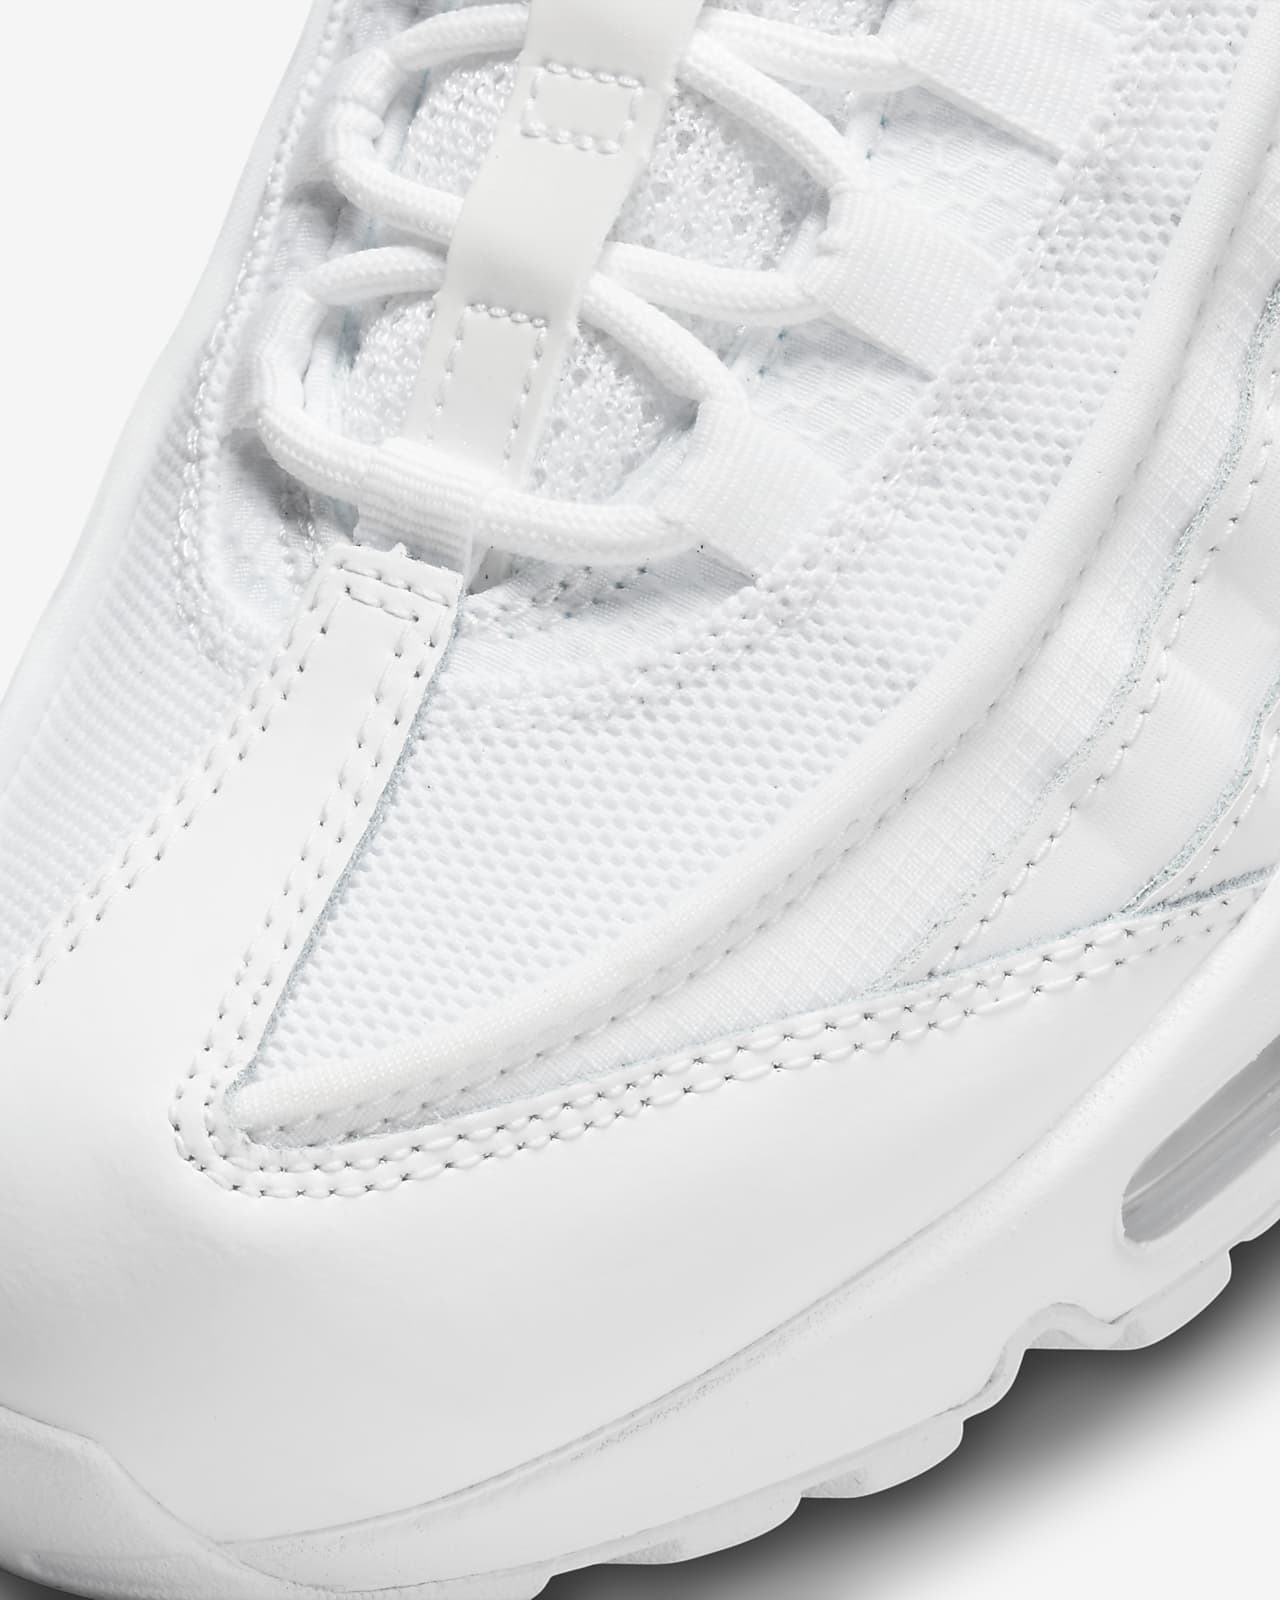 Nike Air Max 95 Essential Men's Shoes